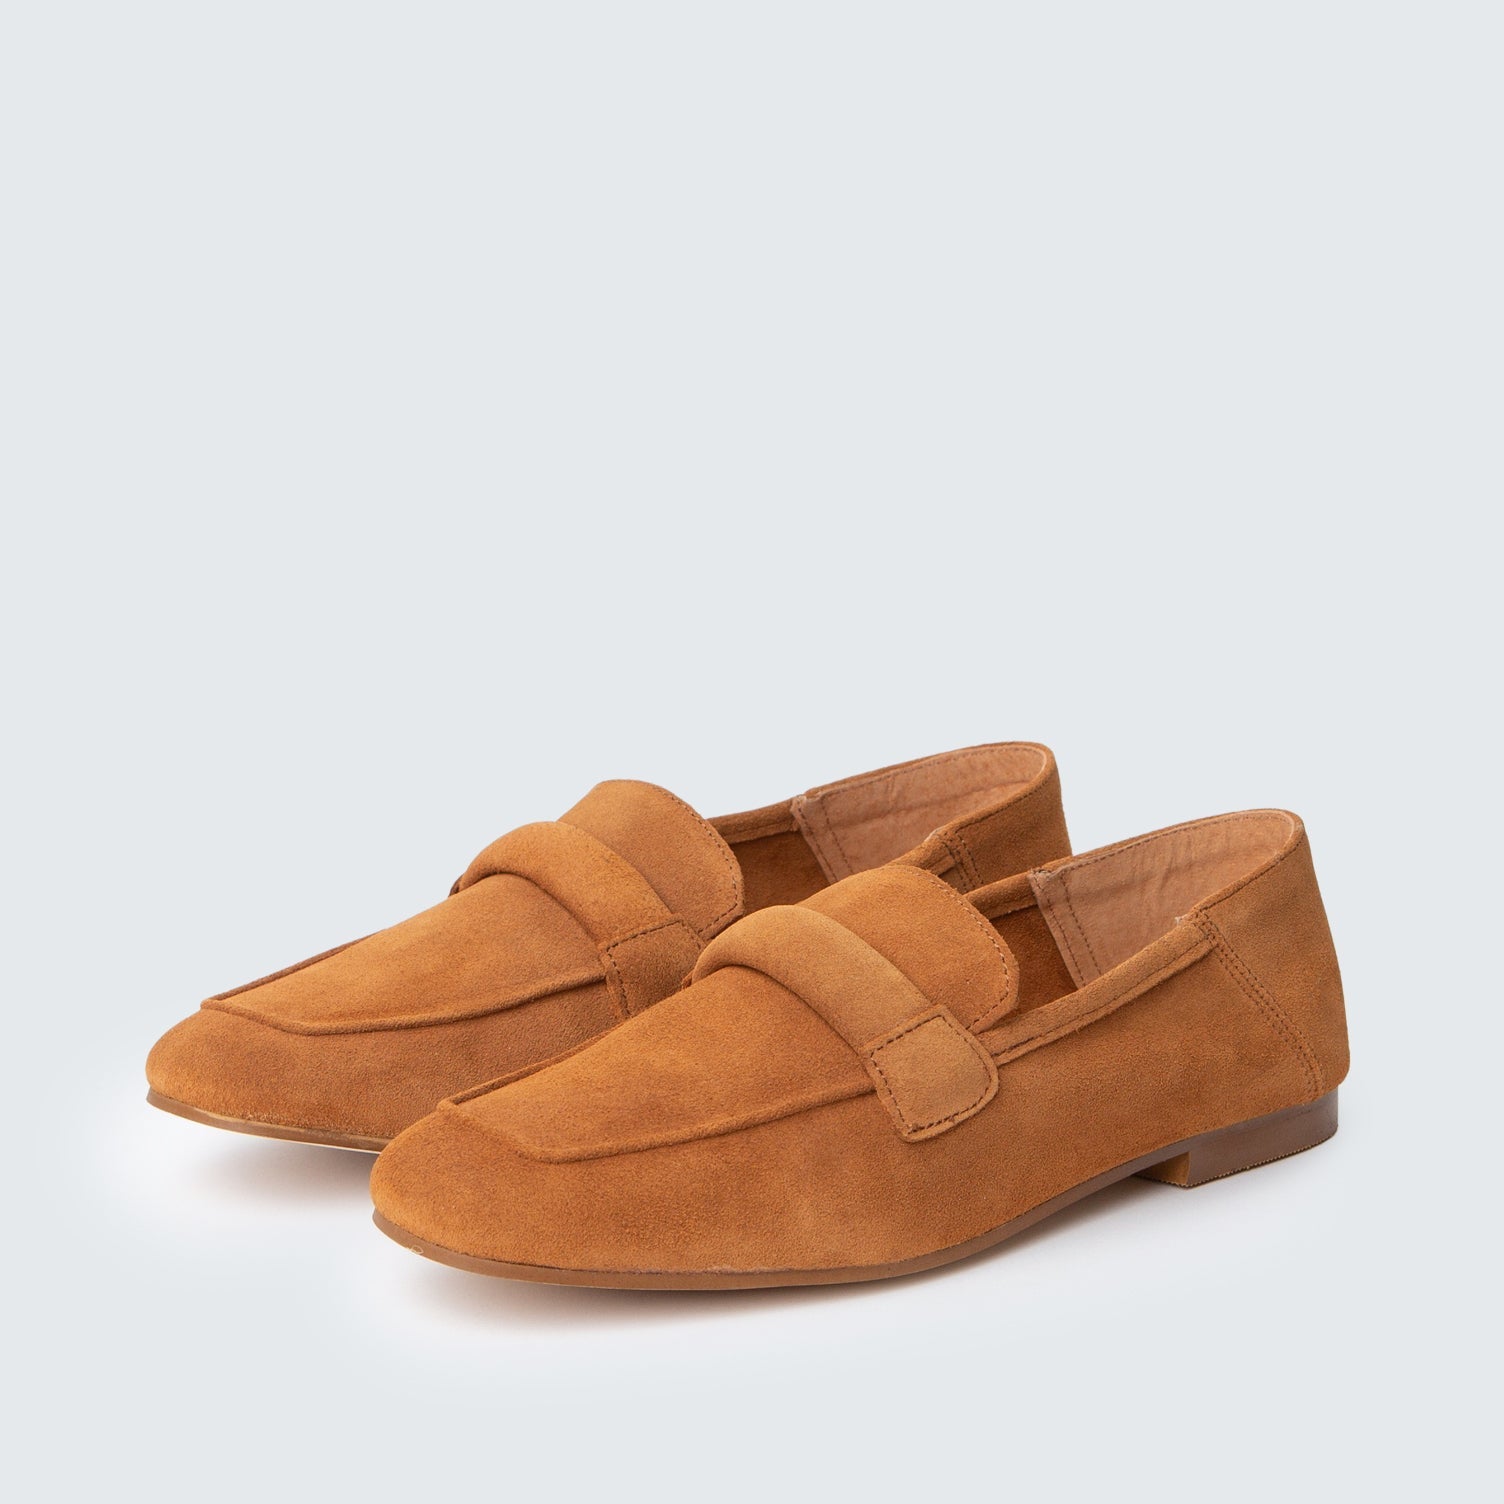 Loafer One Shoe | New -Suede Cognac- ann kurz